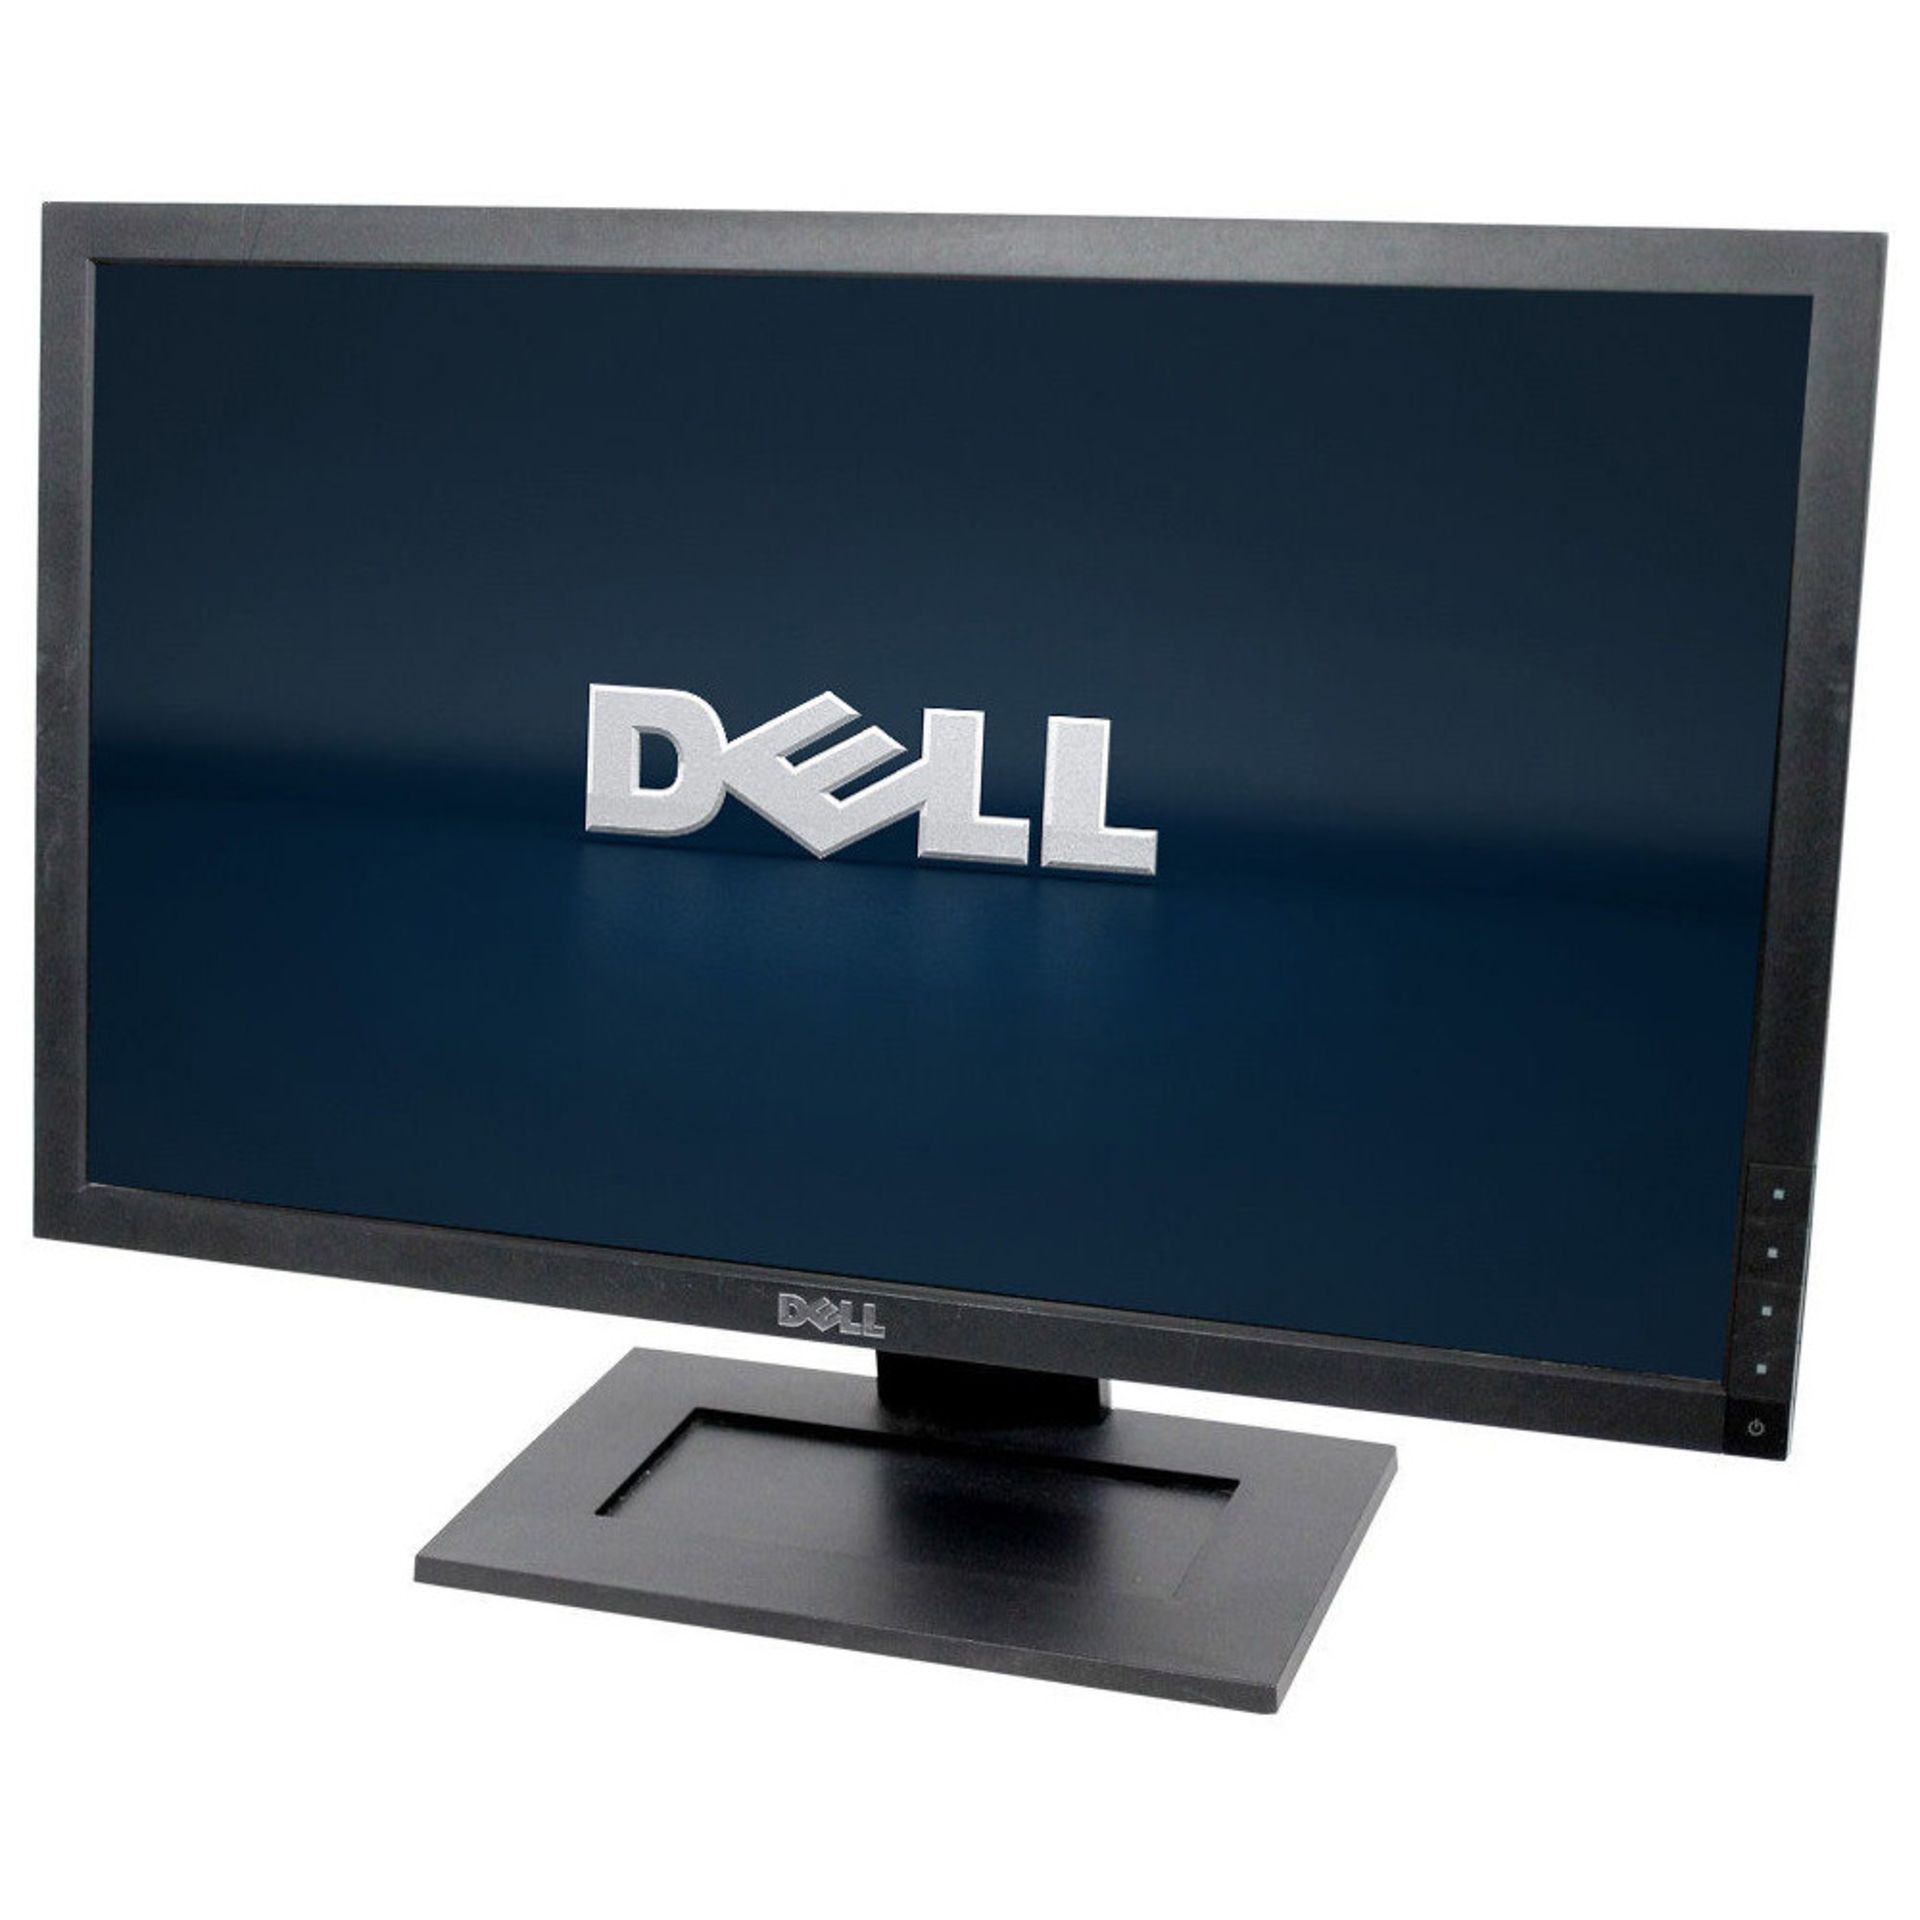 1 x Dell E2210HC 1920 x 1080 Resolution 22" WideScreen Monitor - CL285 - Includes Power & Video